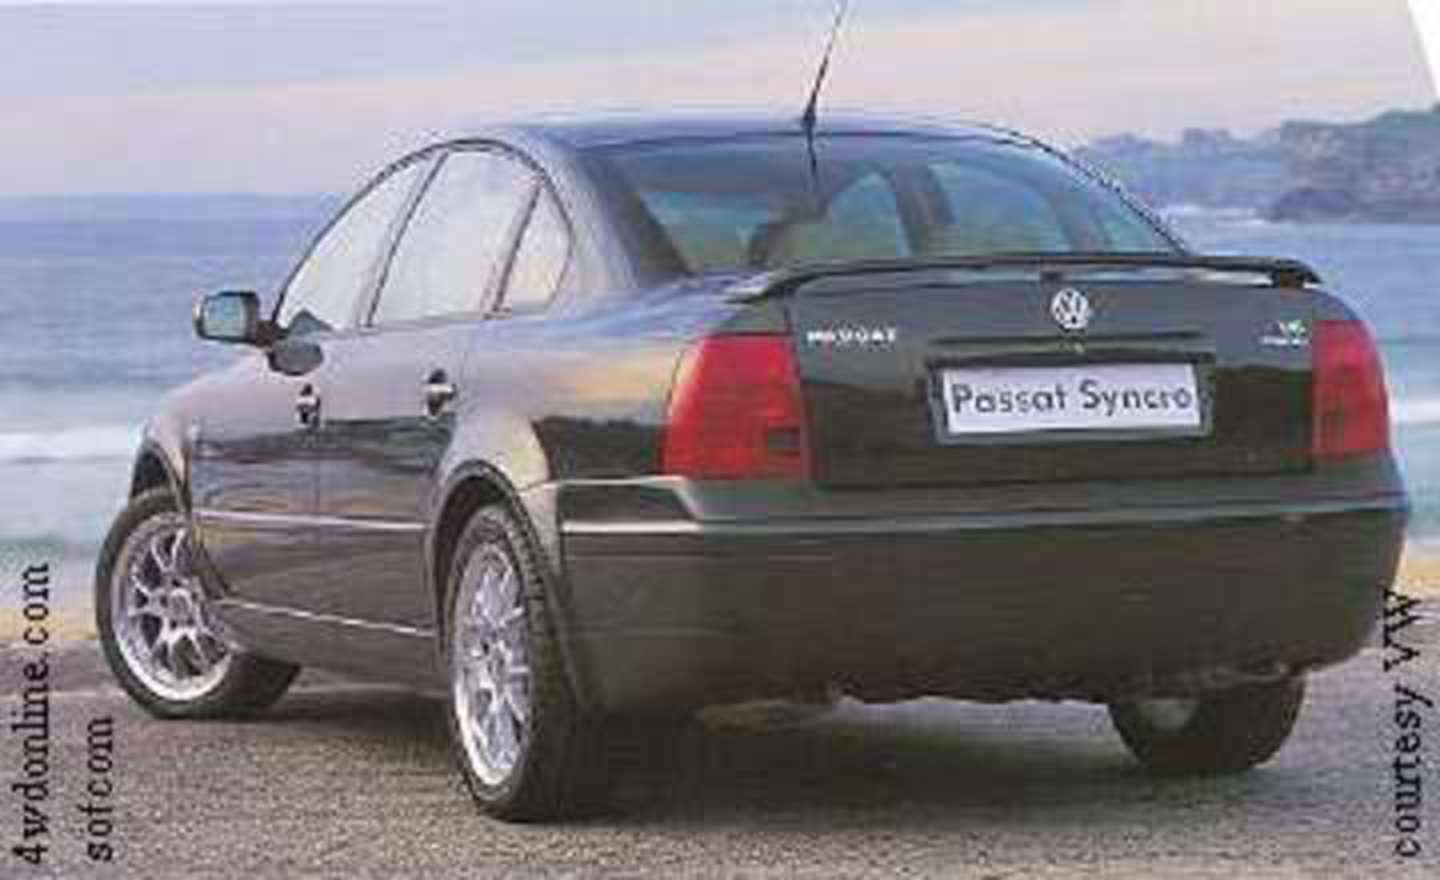 Volkswagen Passat V6 Syncro. View Download Wallpaper. 360x220. Comments